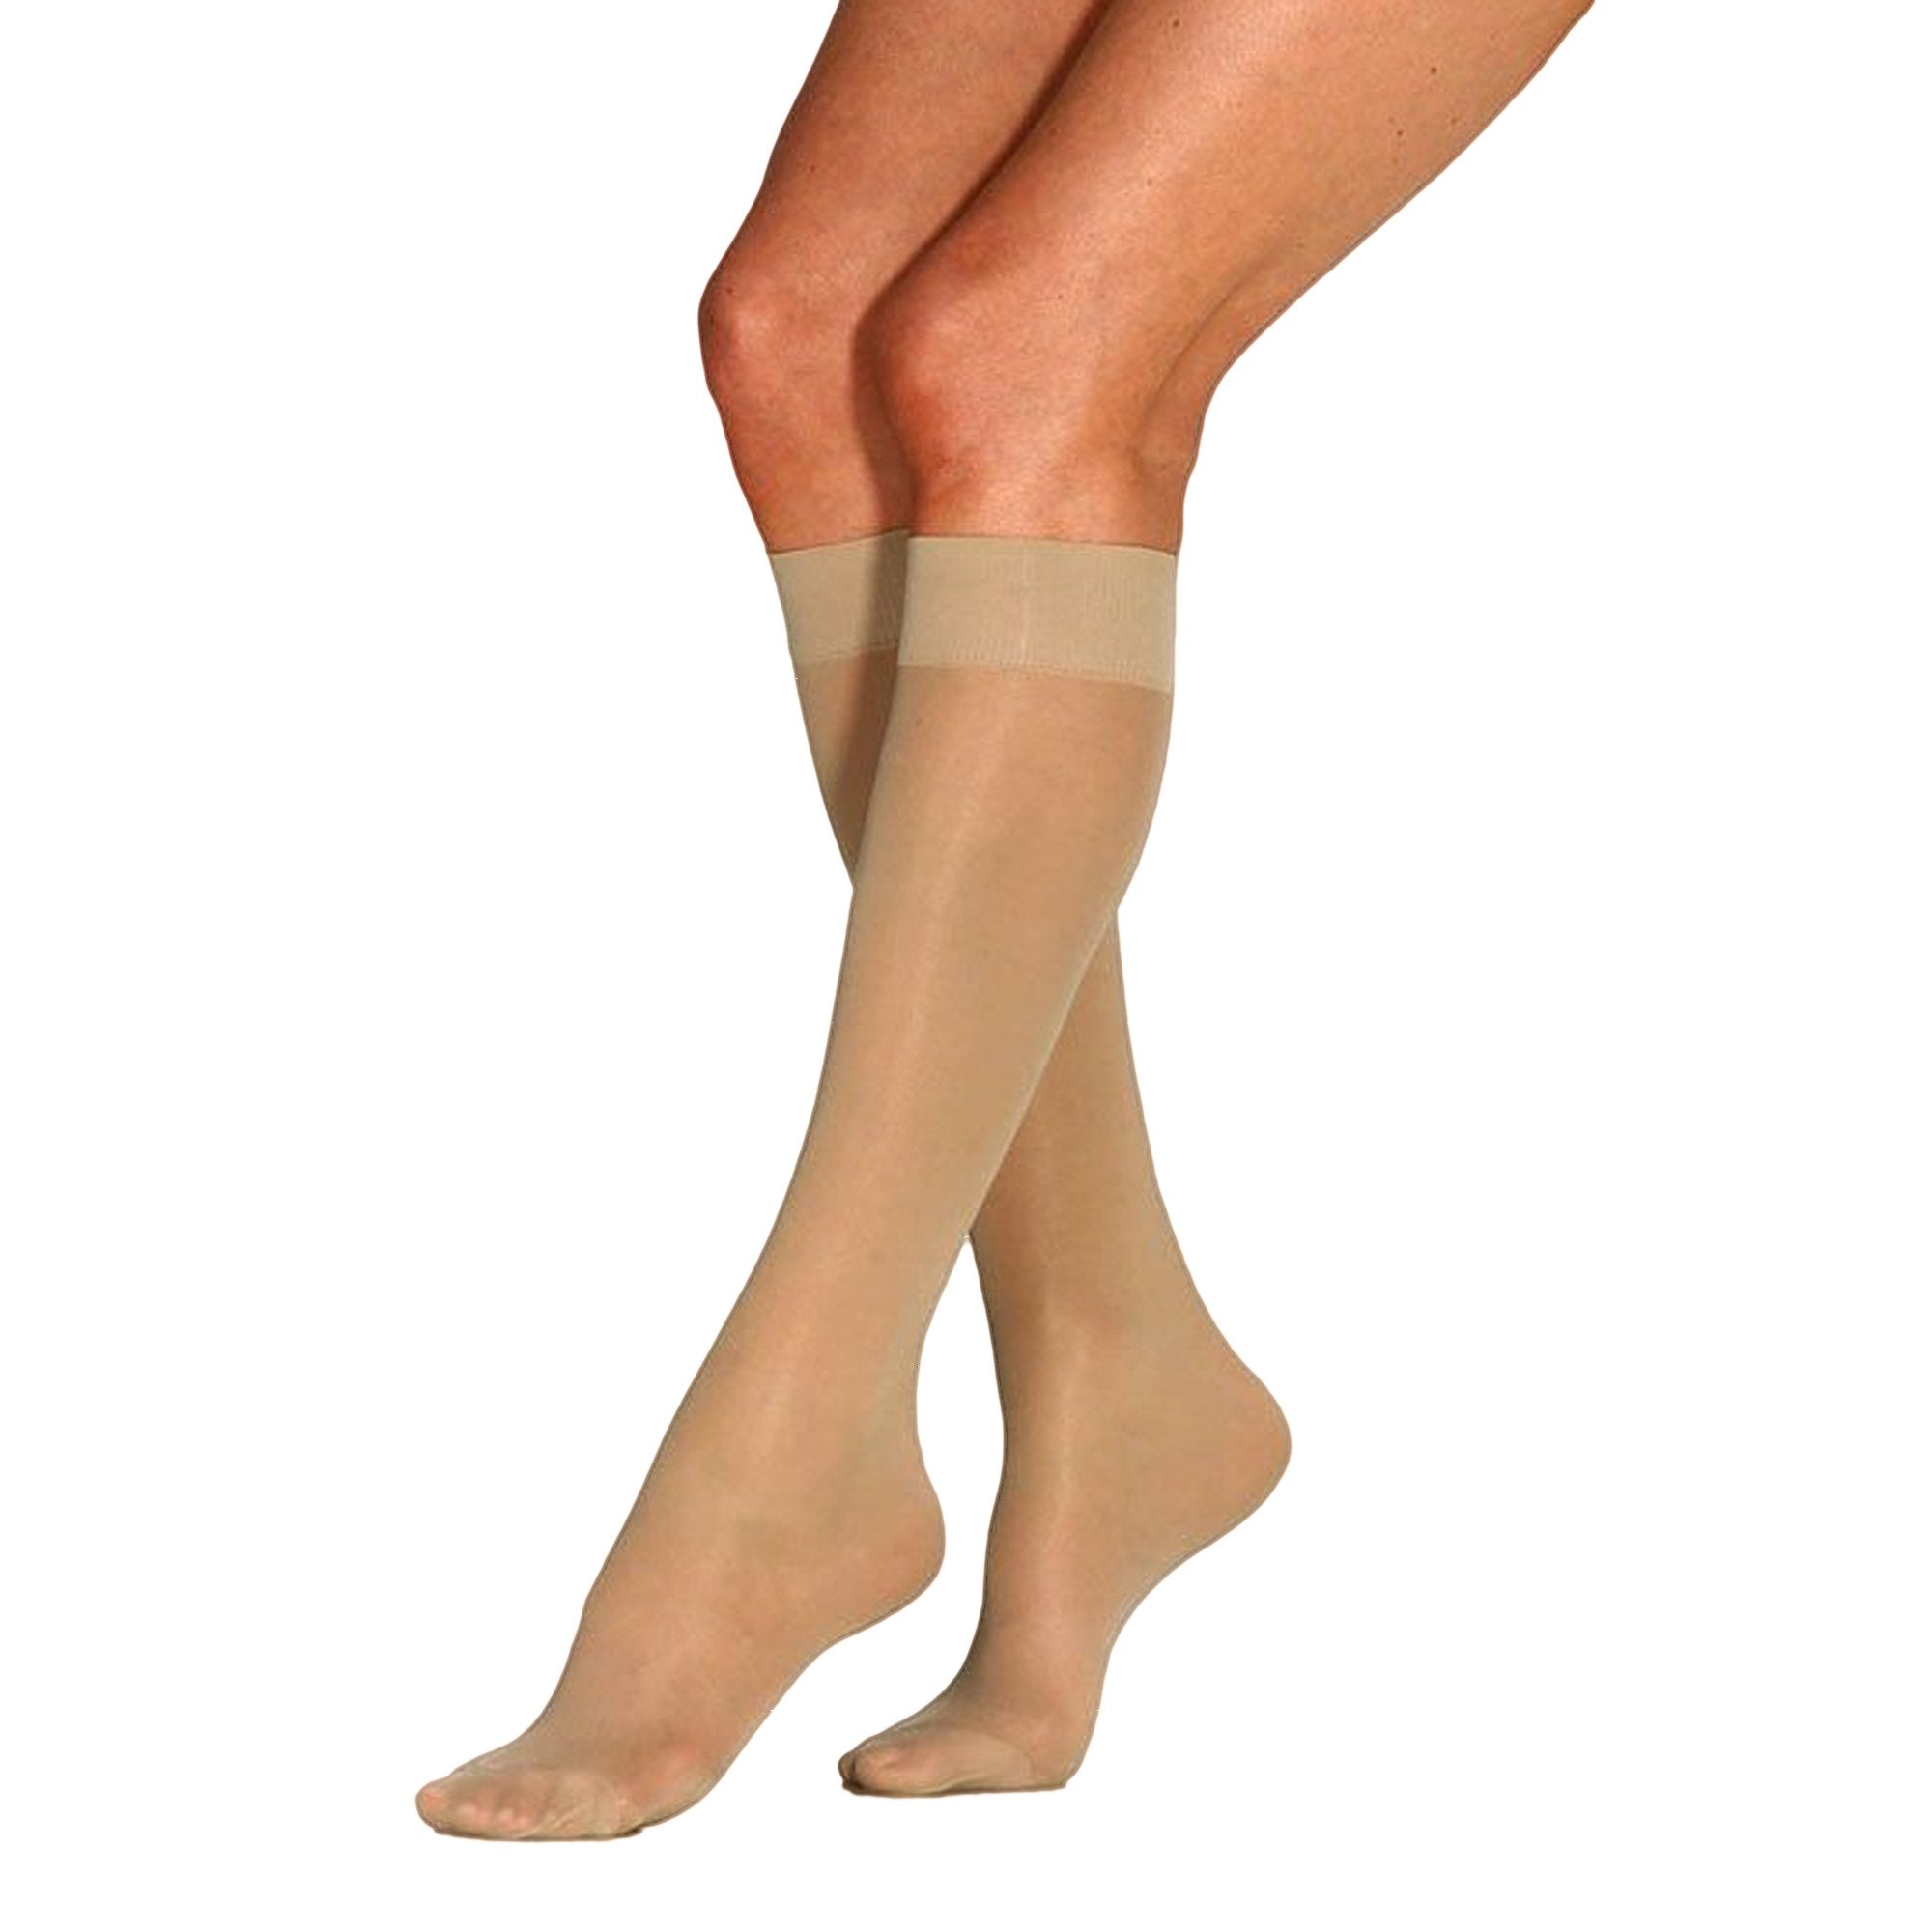 JOBST UltraSheer Female Knee-High Compression Stockings, Medium, Sun Bronze -1 Pair